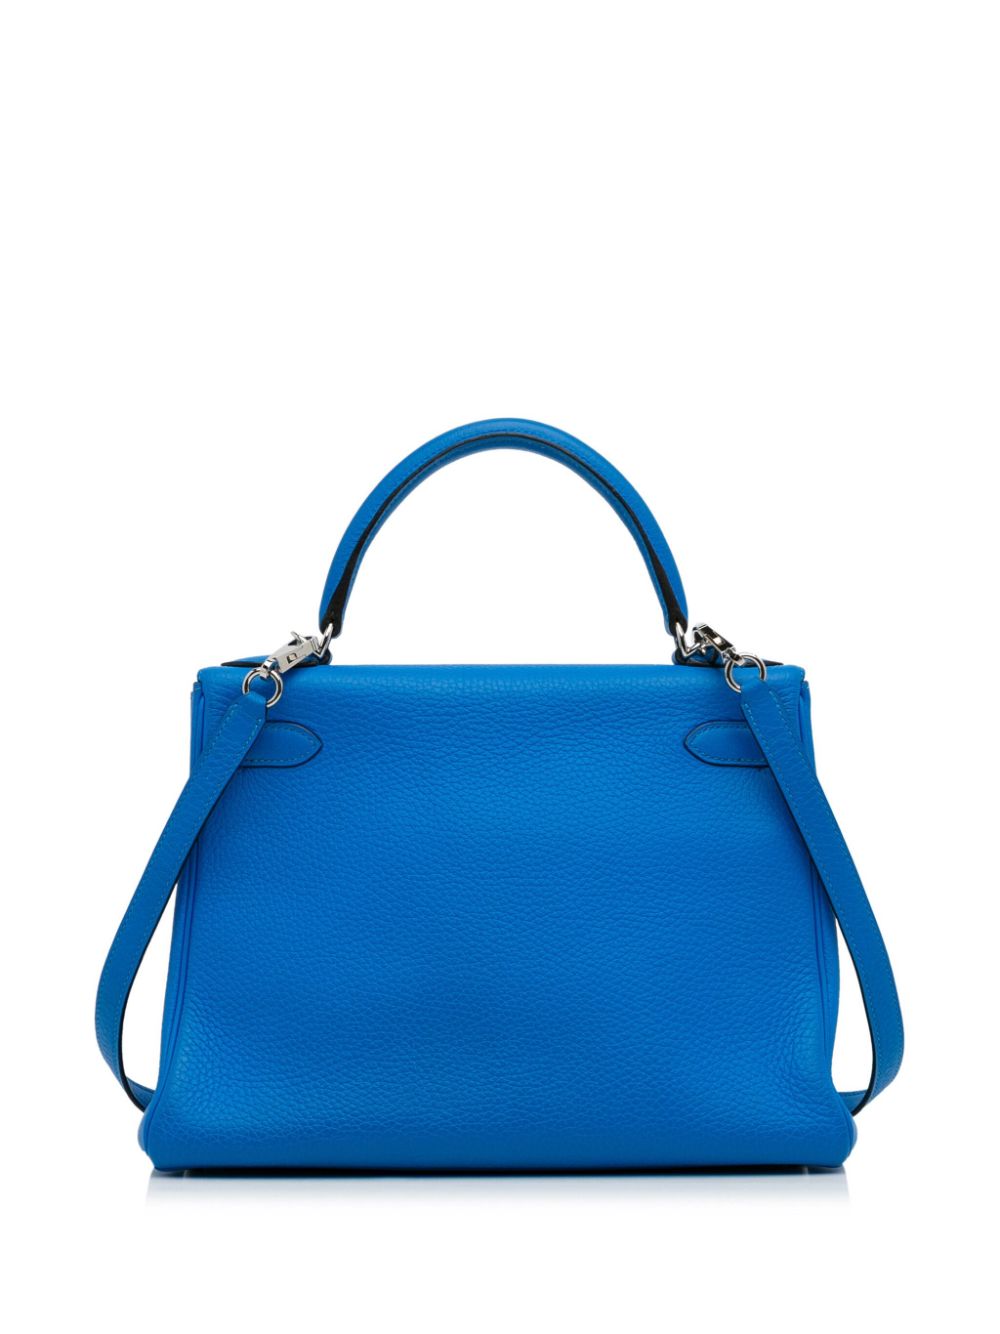 Hermès 2012 pre-owned Kelly 28 Retourne two-way handbag - Blauw